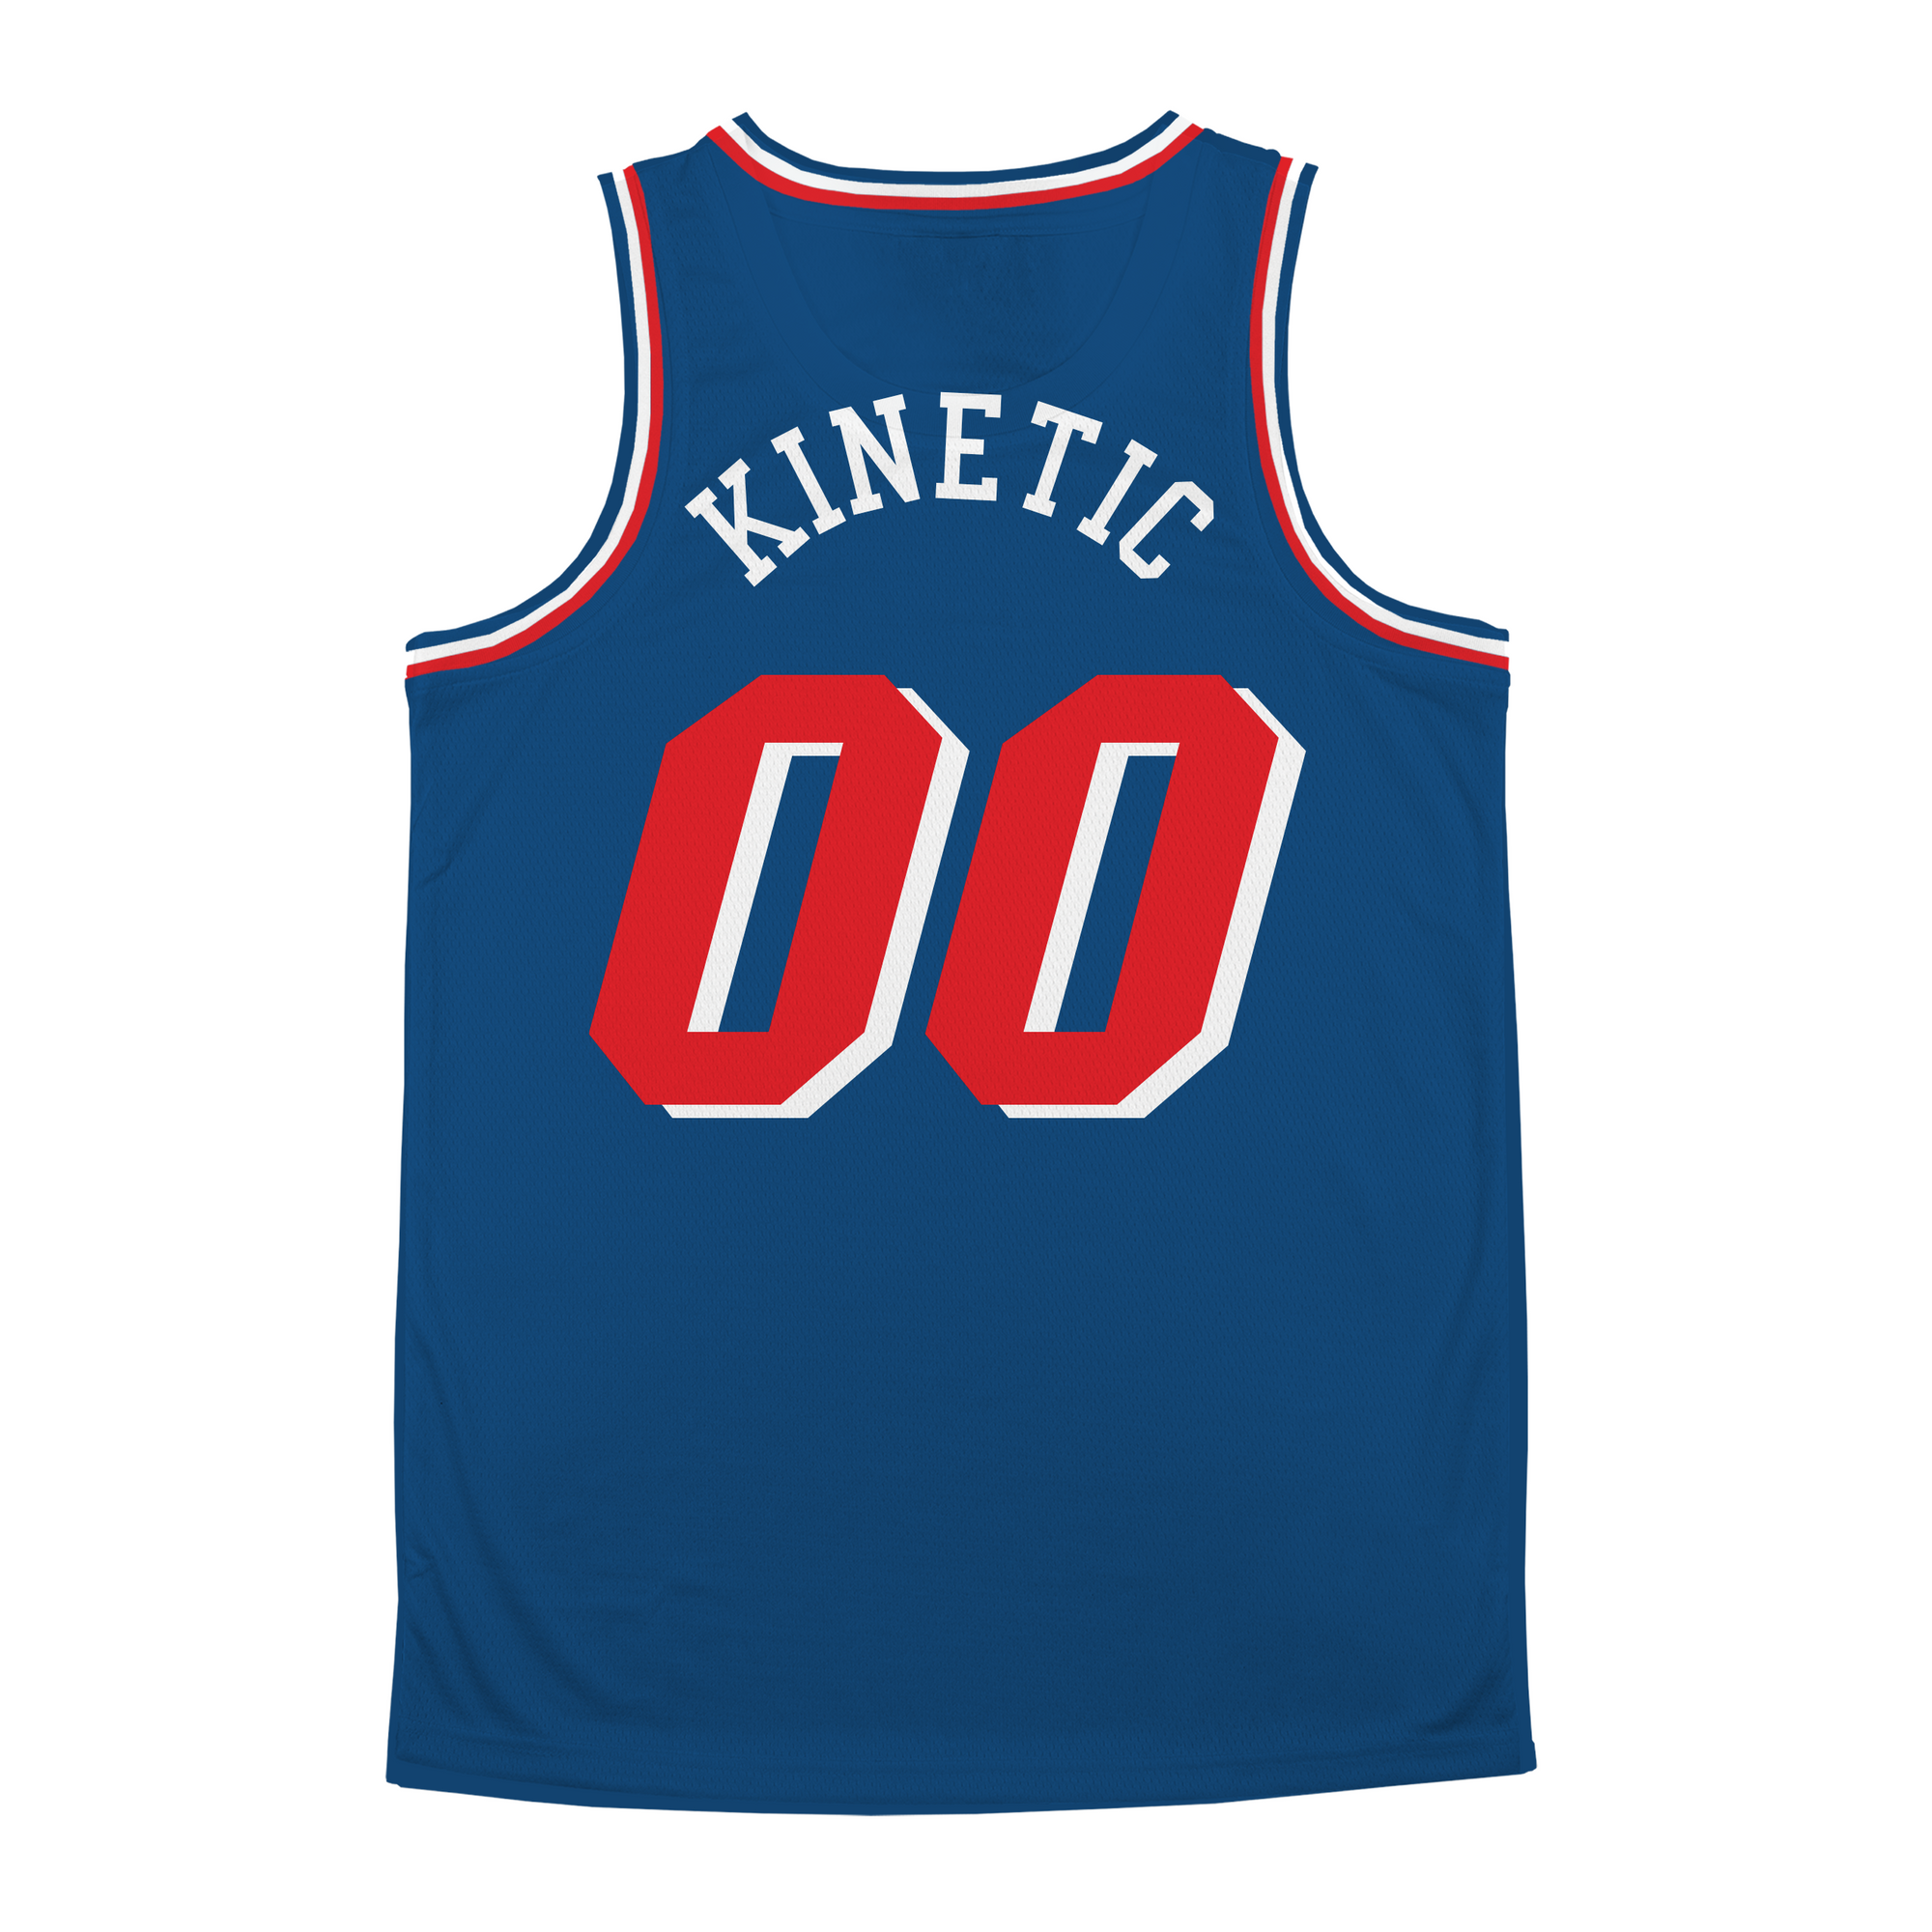 Kappa Alpha Order - The Dream Basketball Jersey